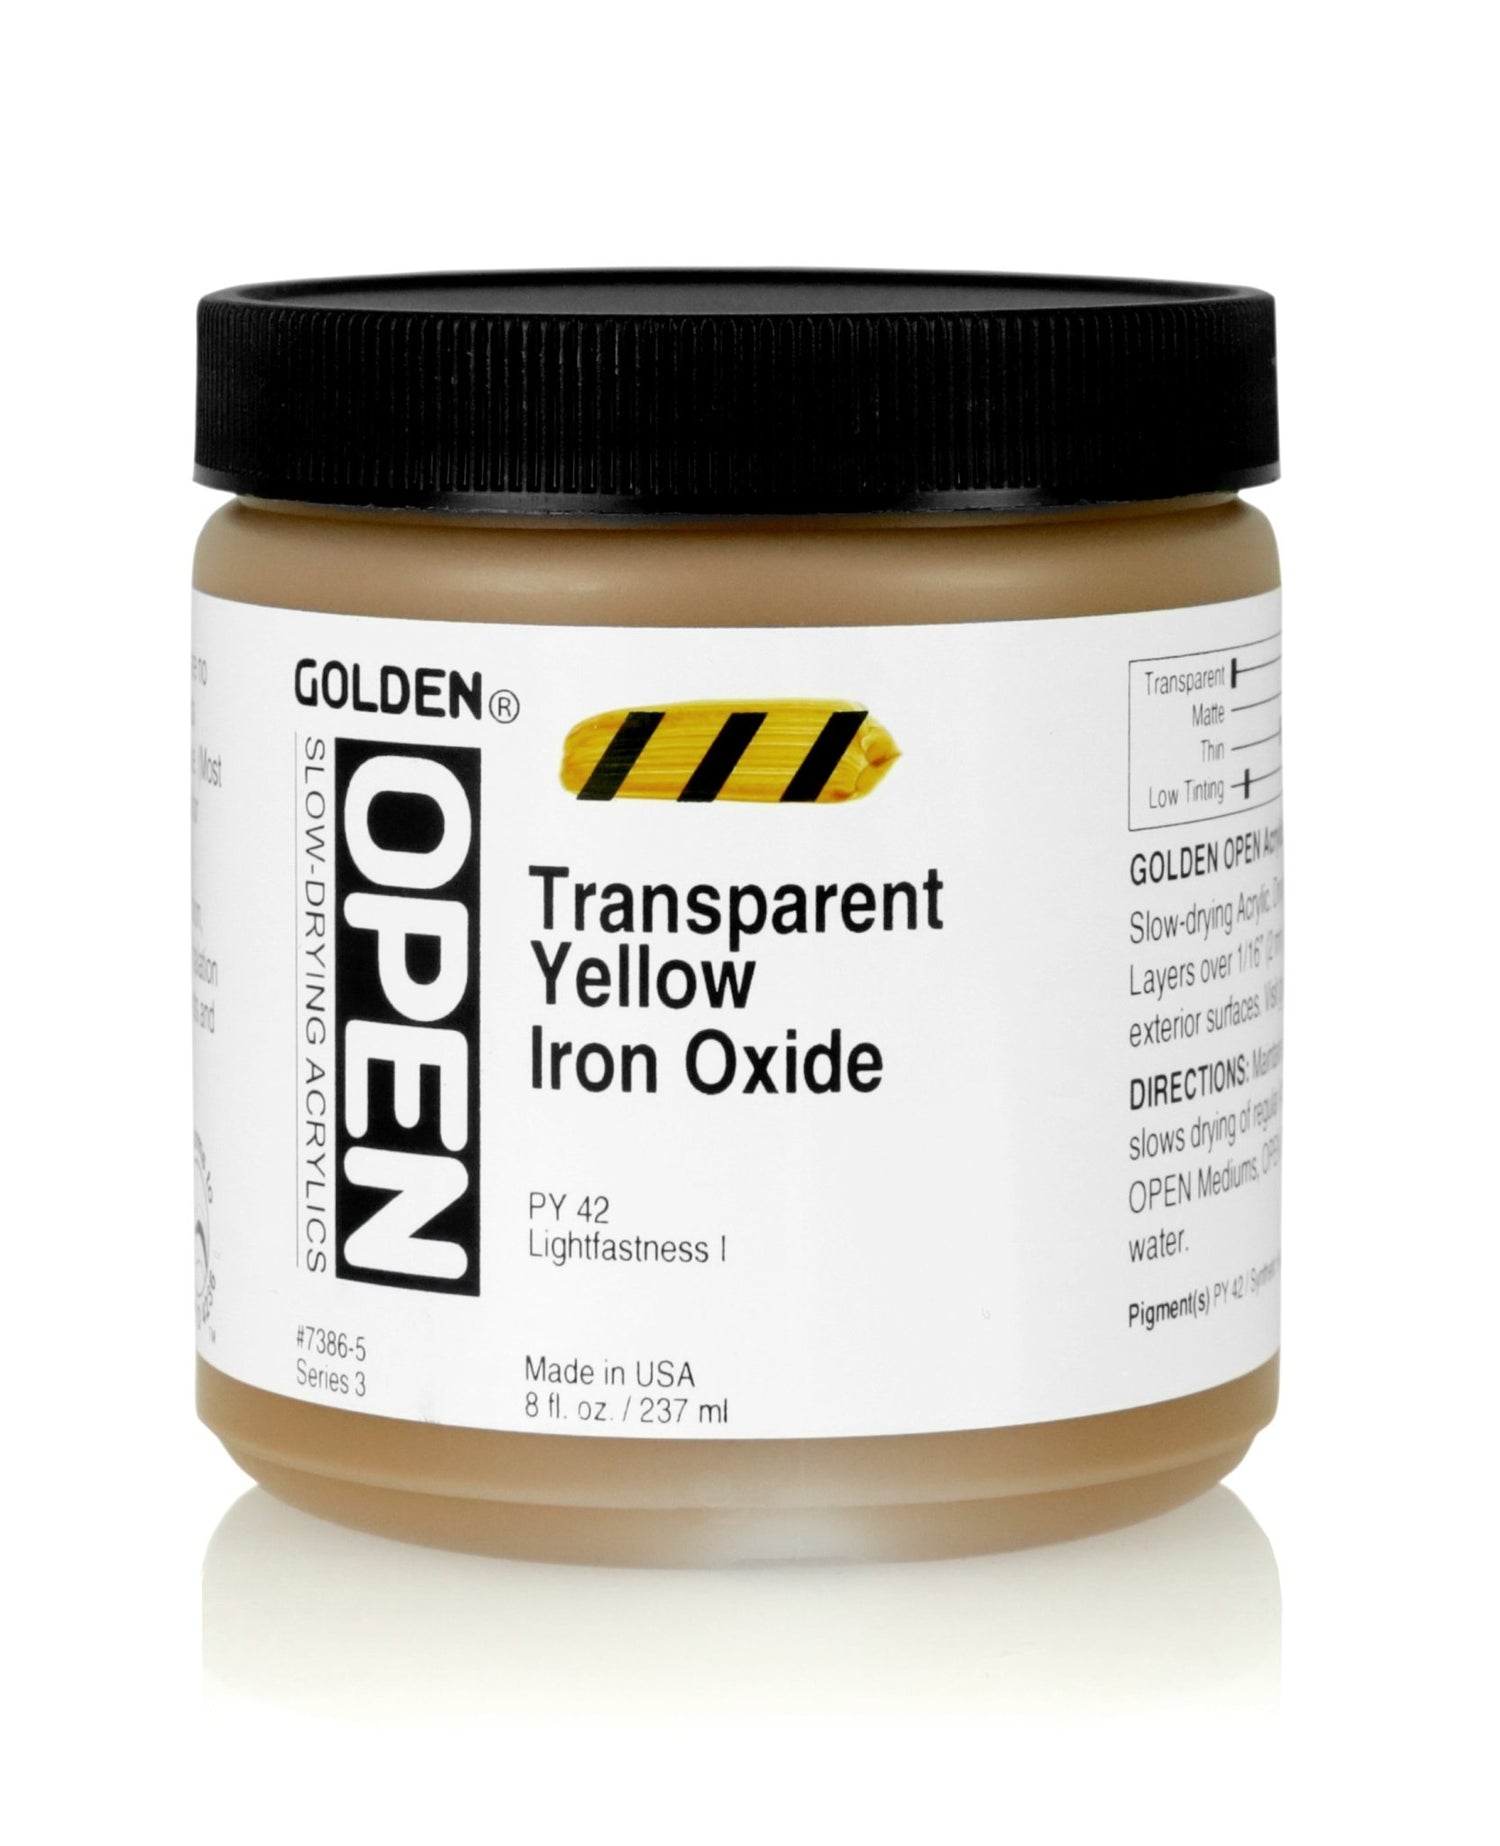 Golden Open Acrylics 237ml Transparent Yellow Iron Oxide - theartshop.com.au